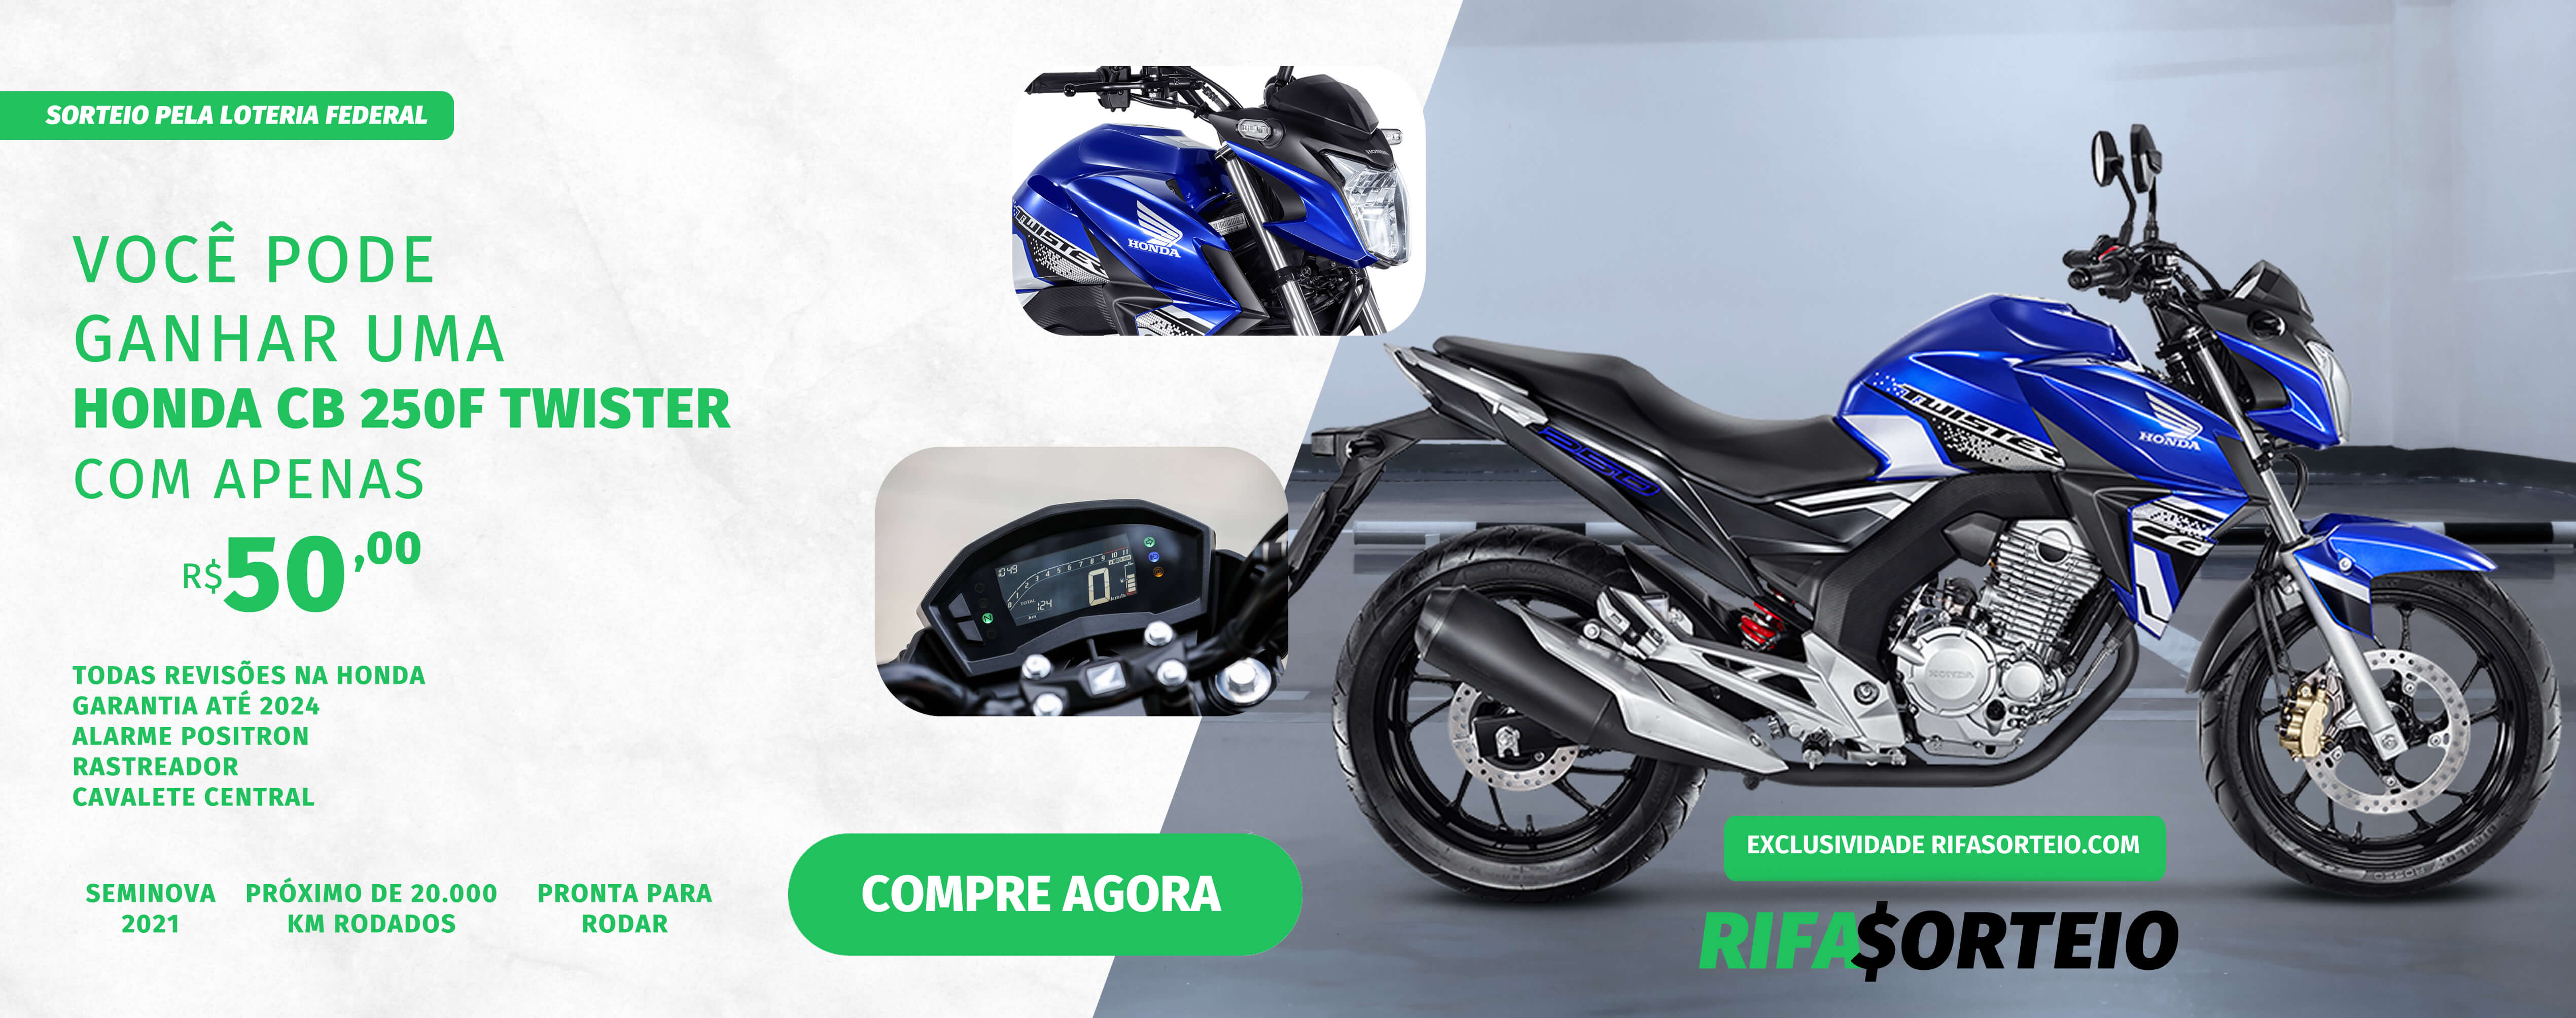 Sorteio de Rifa Honda CB Twister 250 2021